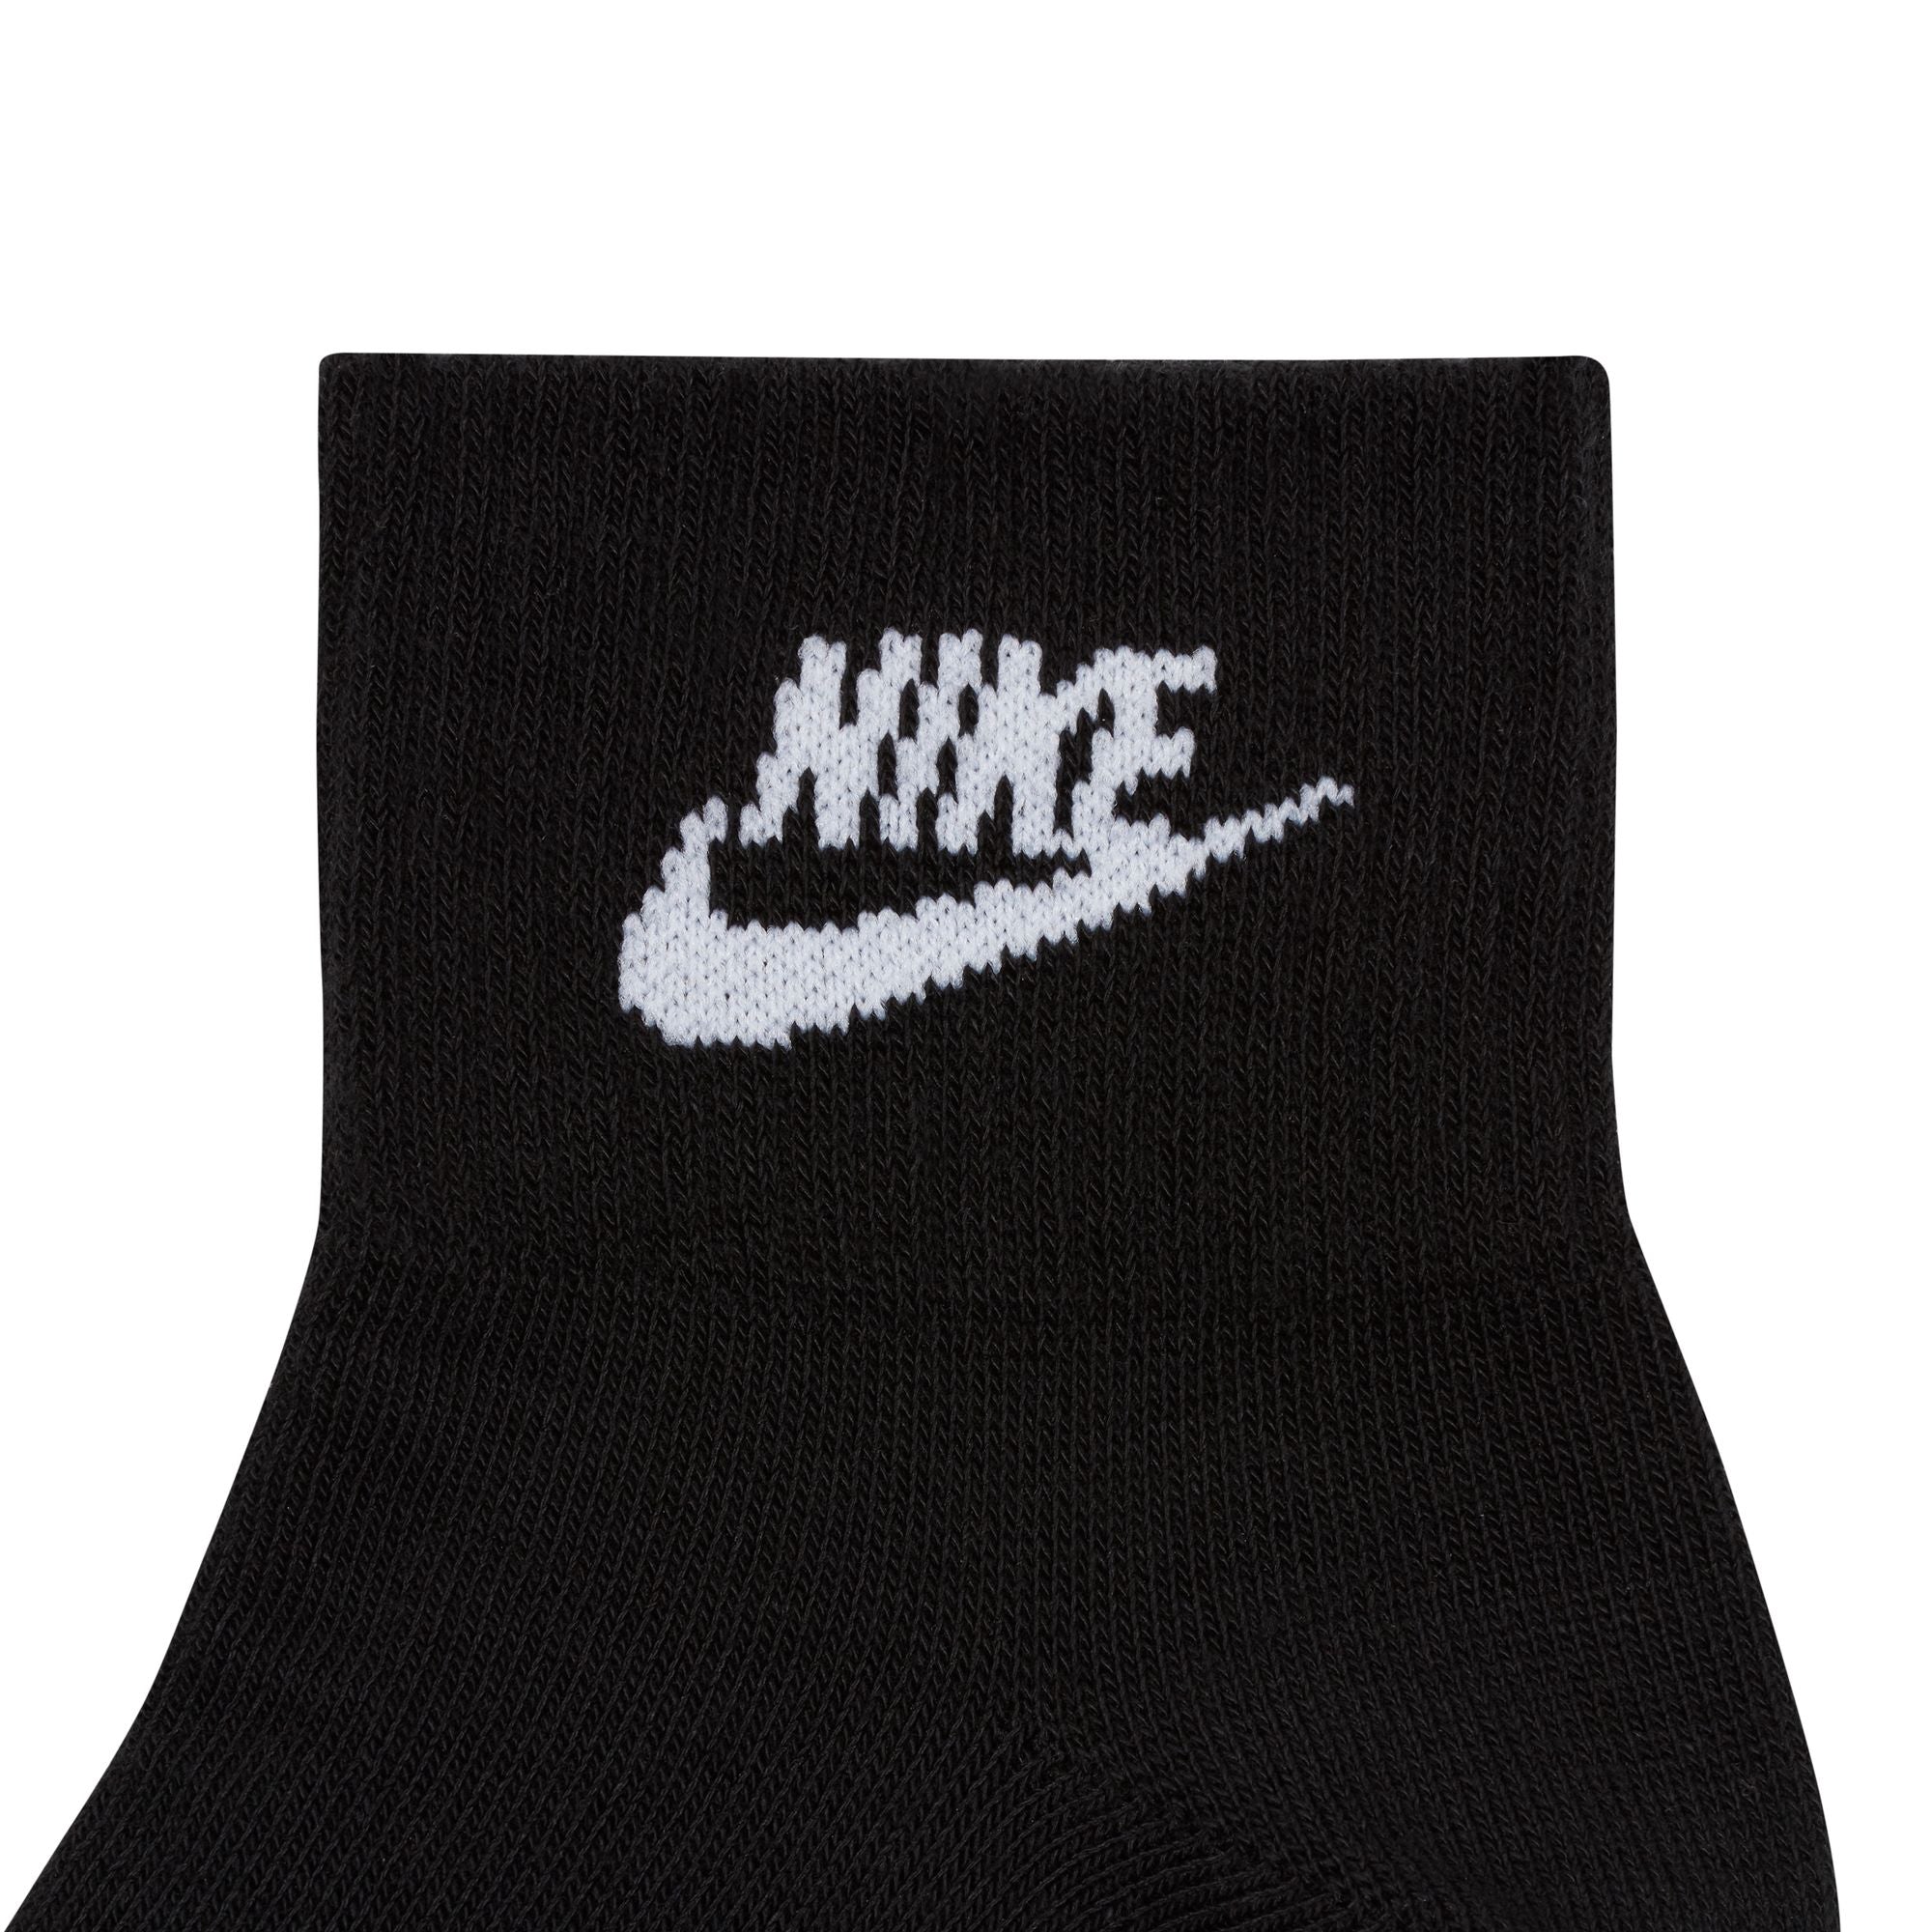 Nike Everyday Essential Ankle 3 Pack Socks - Black/White